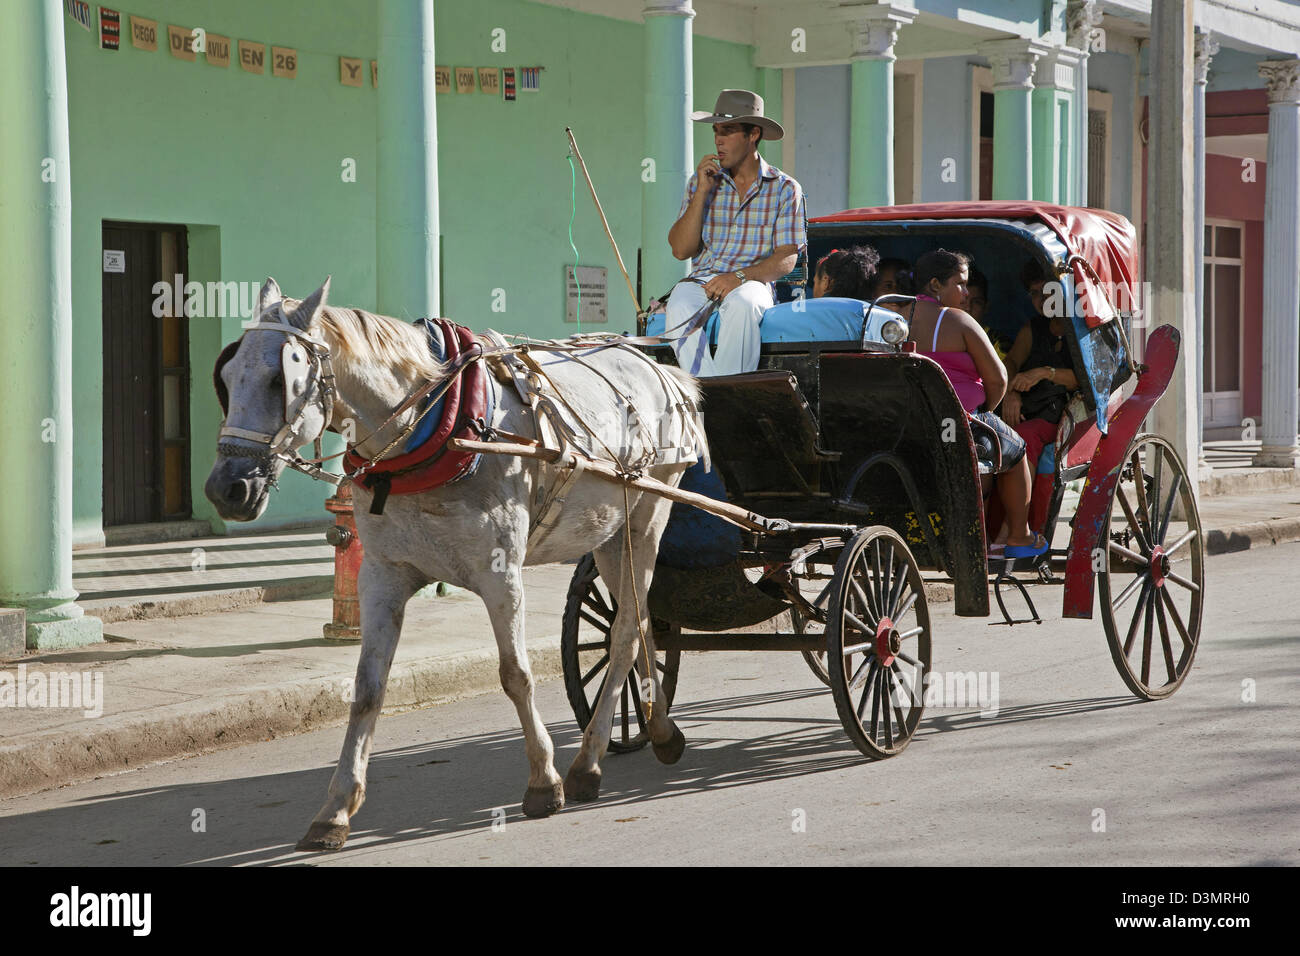 Public transport by horse and carriage in Ciego de Ávila, Cuba, Caribbean Stock Photo